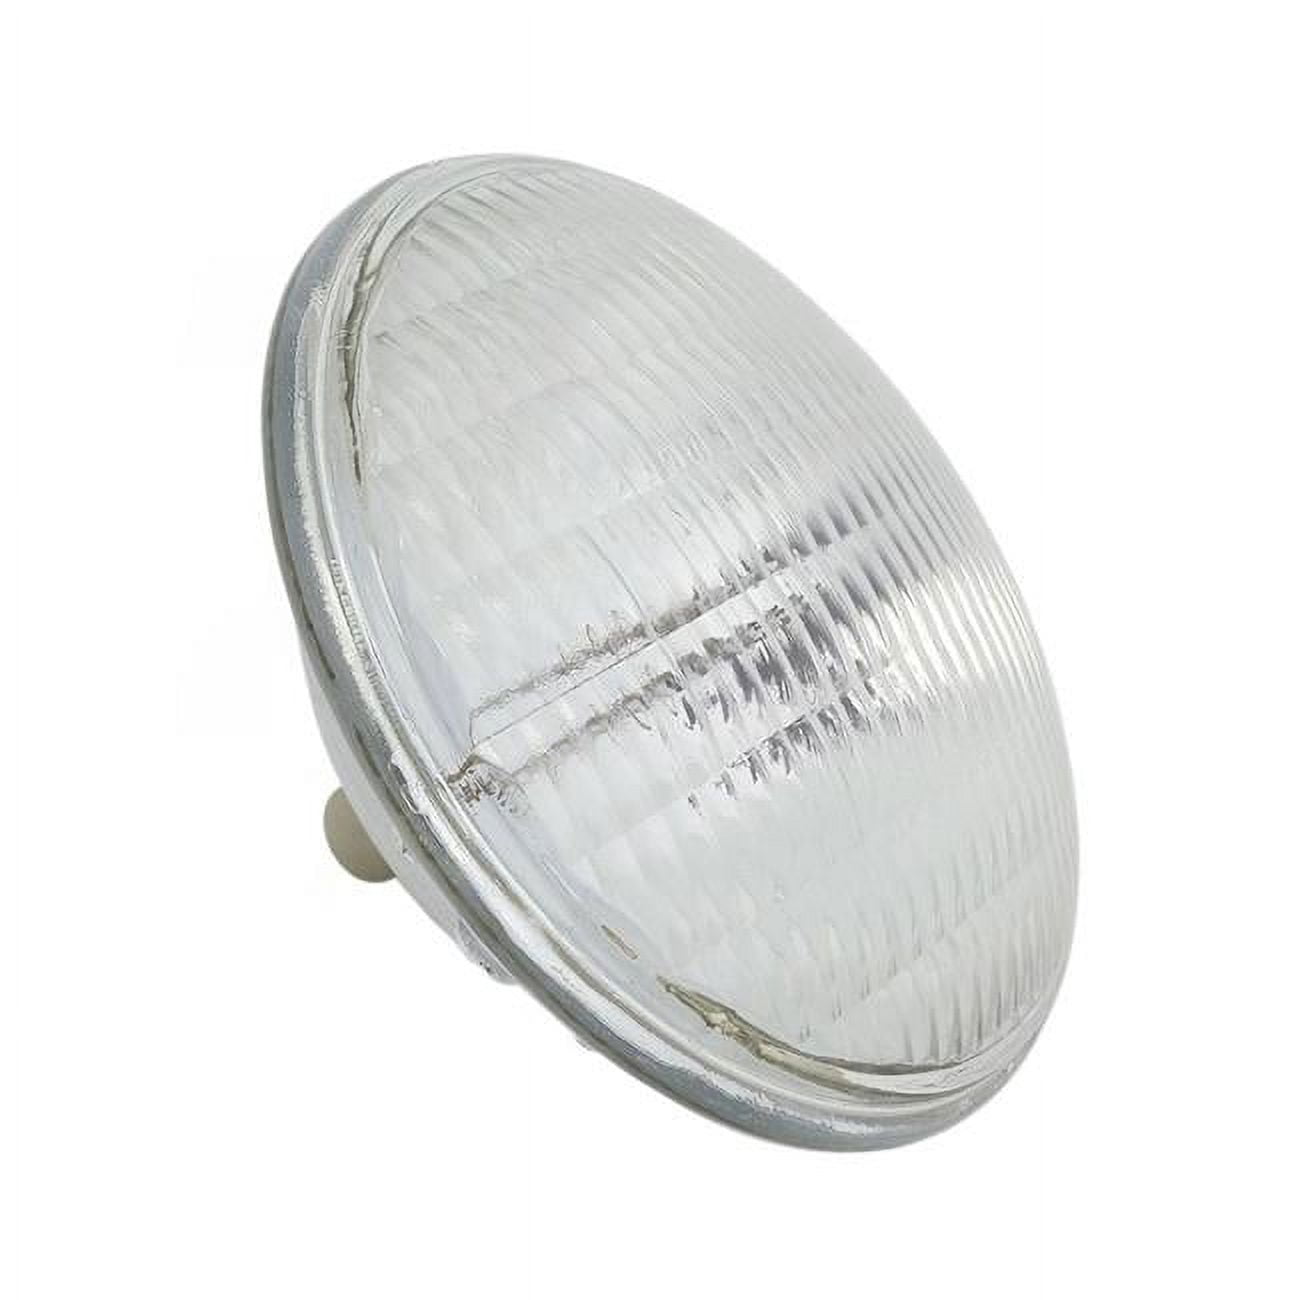 Dny-170051 Par56 300w 240v Mfl Ac Lamp For Dj & Club Lighting